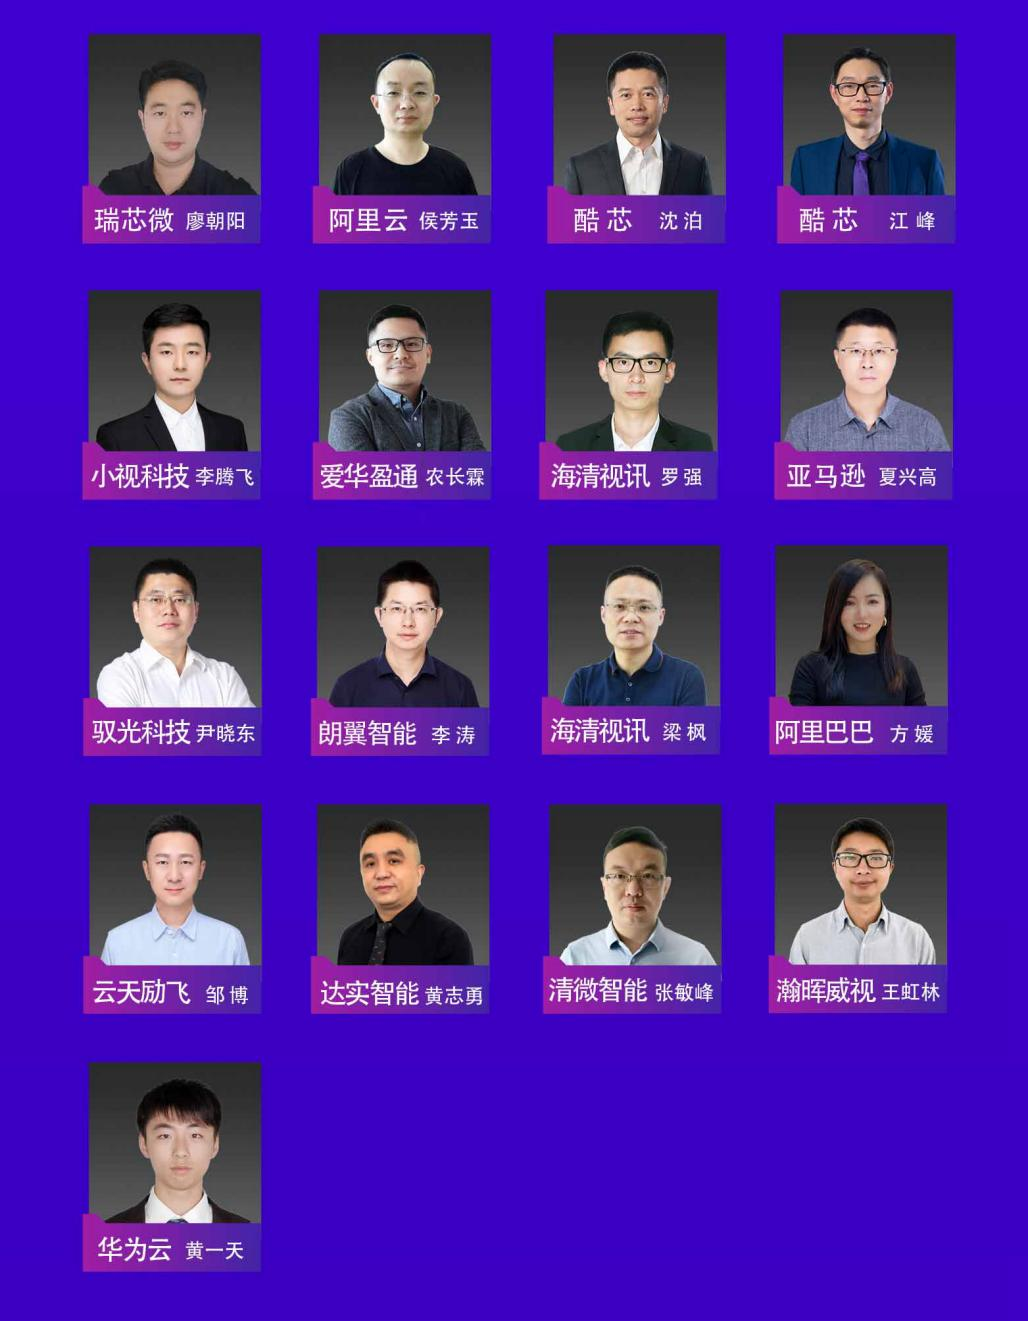 【2022 AI大會】第二屆華南AI安防、商顯跨界對接會，6月底盛大來襲！